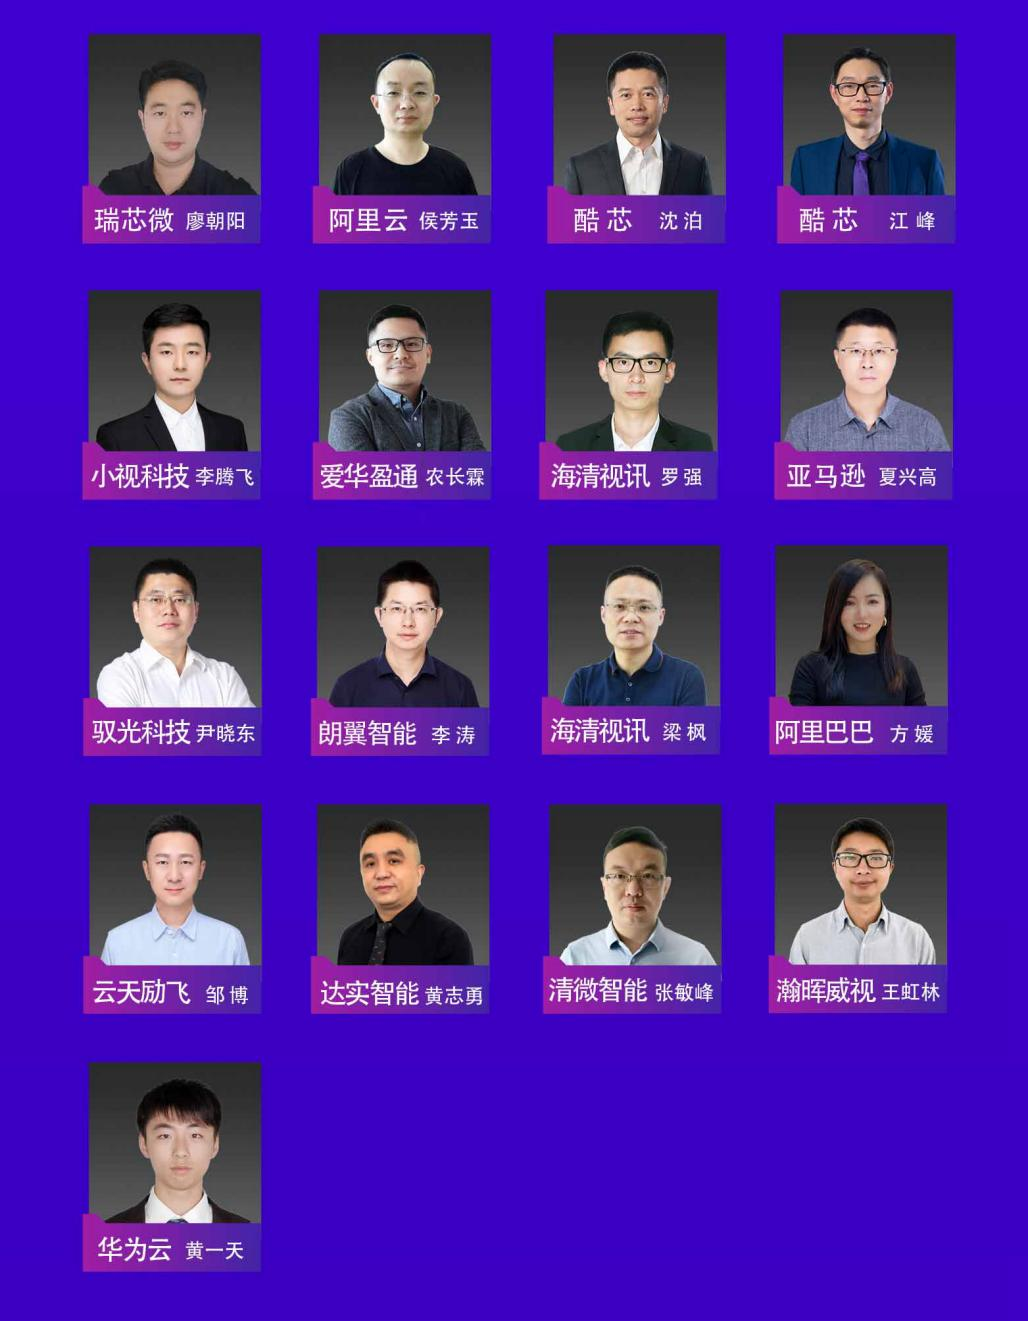 【2022 AI大會】第二屆華南AI安防、商顯跨界對接會，6月底盛大來襲！